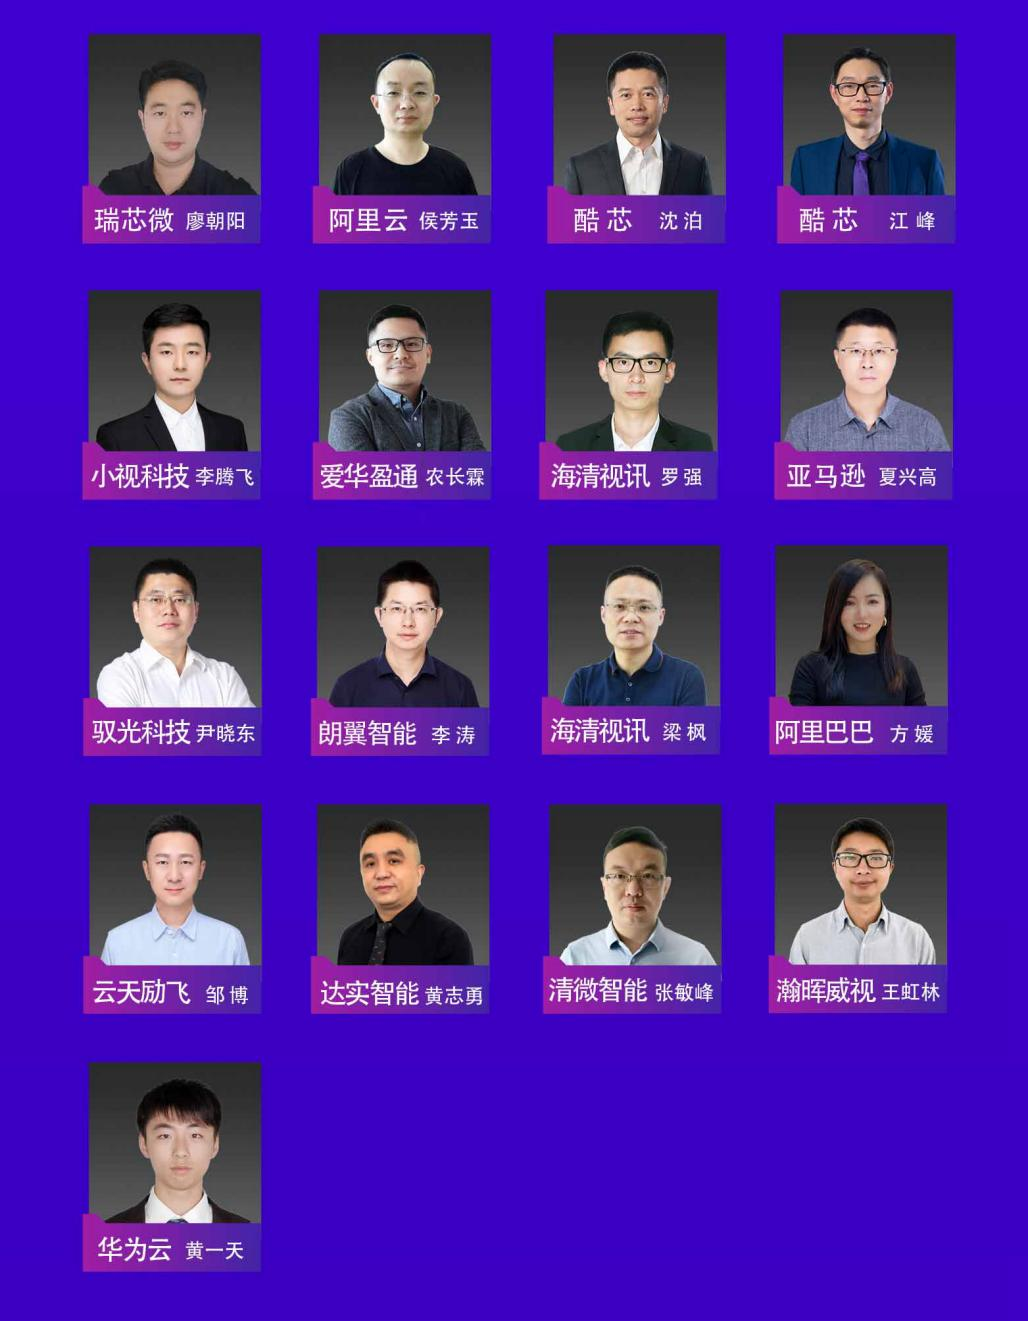 【2022 AI大會】第二屆華南AI安防、商顯跨界對接會，6月底盛大來襲！